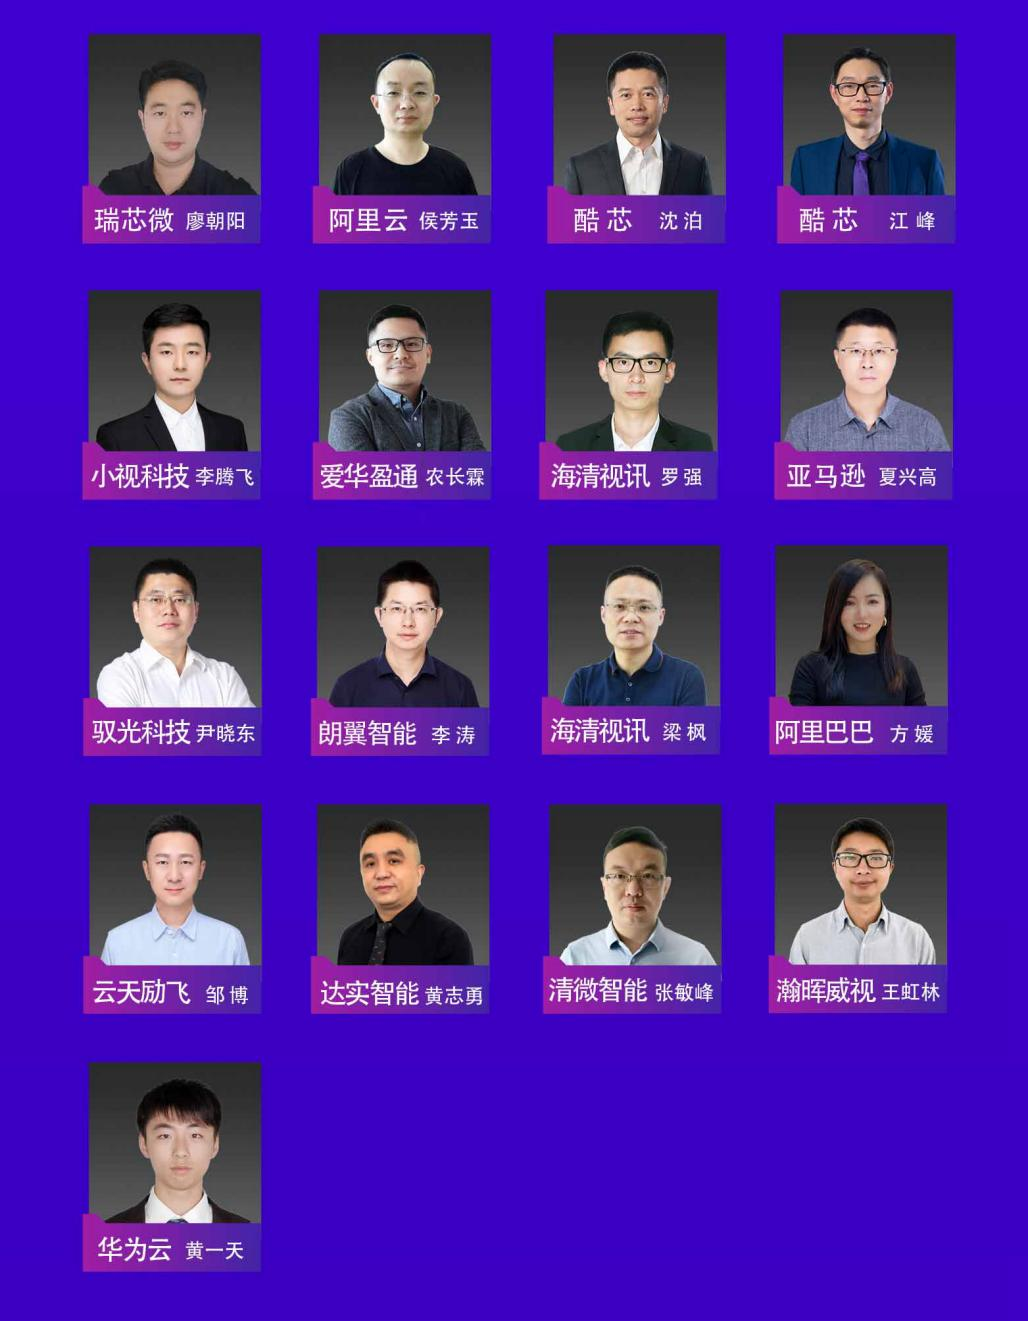 【2022 AI大會】第二屆華南AI安防、商顯跨界對接會，6月底盛大來襲！